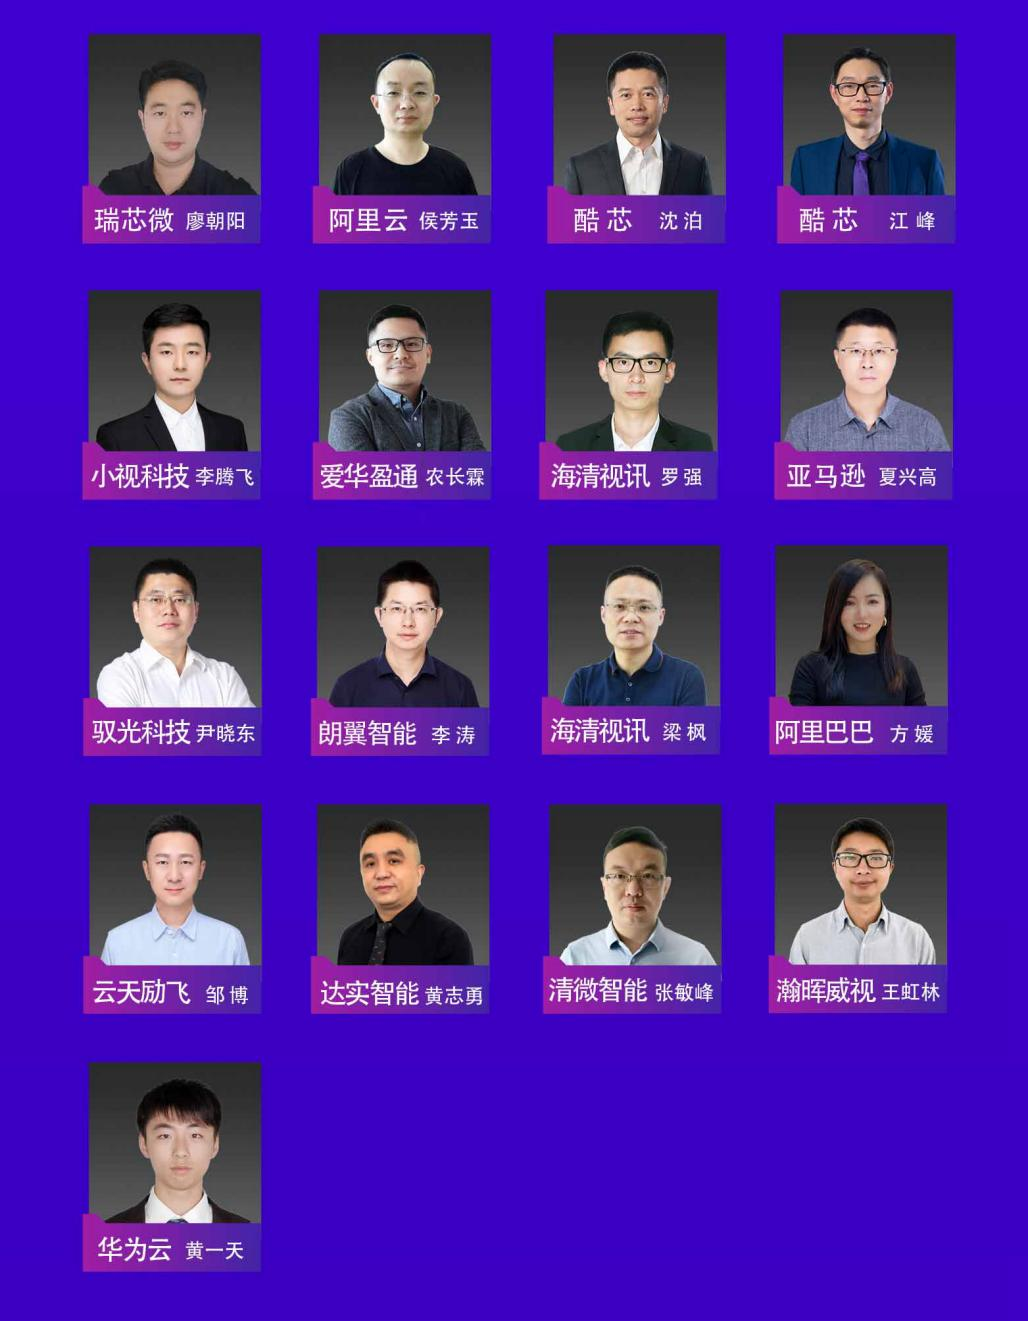 【2022 AI大會】第二屆華南AI安防、商顯跨界對接會，6月底盛大來襲！